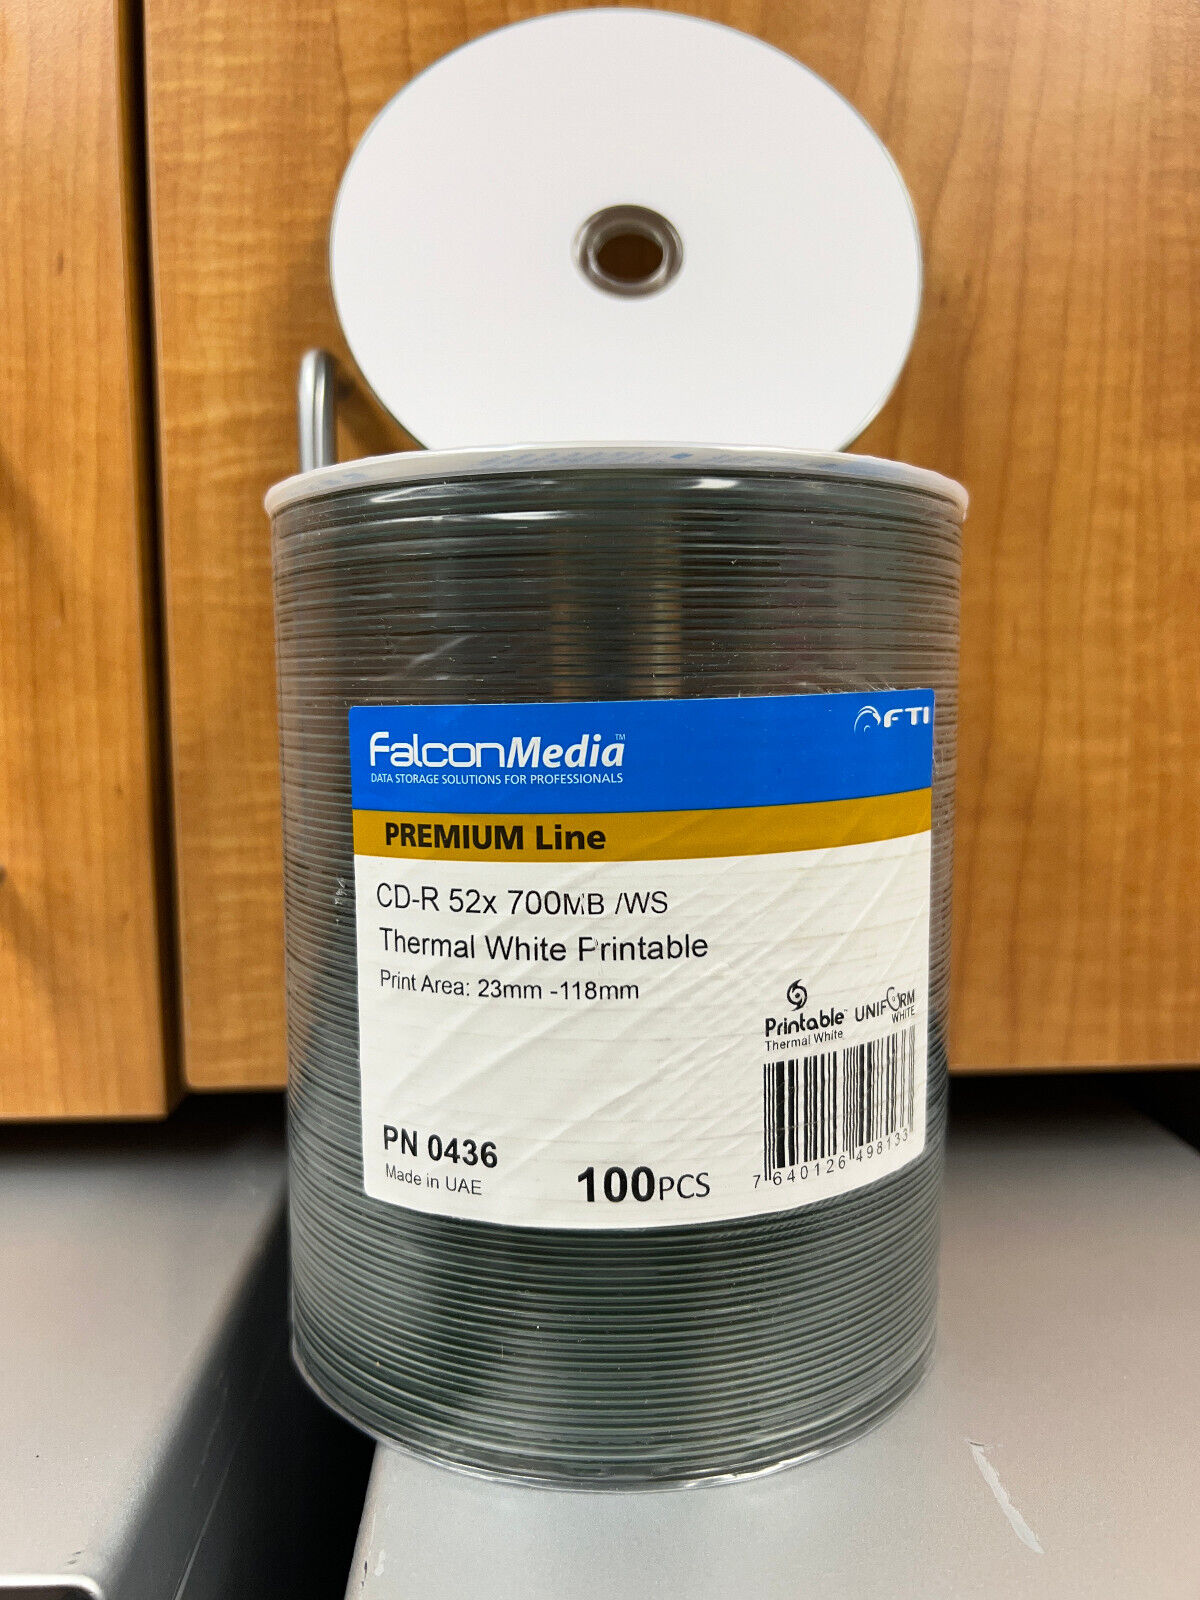 Falcon Media Premium Quality Blank CDs - CD-R White Thermal Printable 52x 700MB 